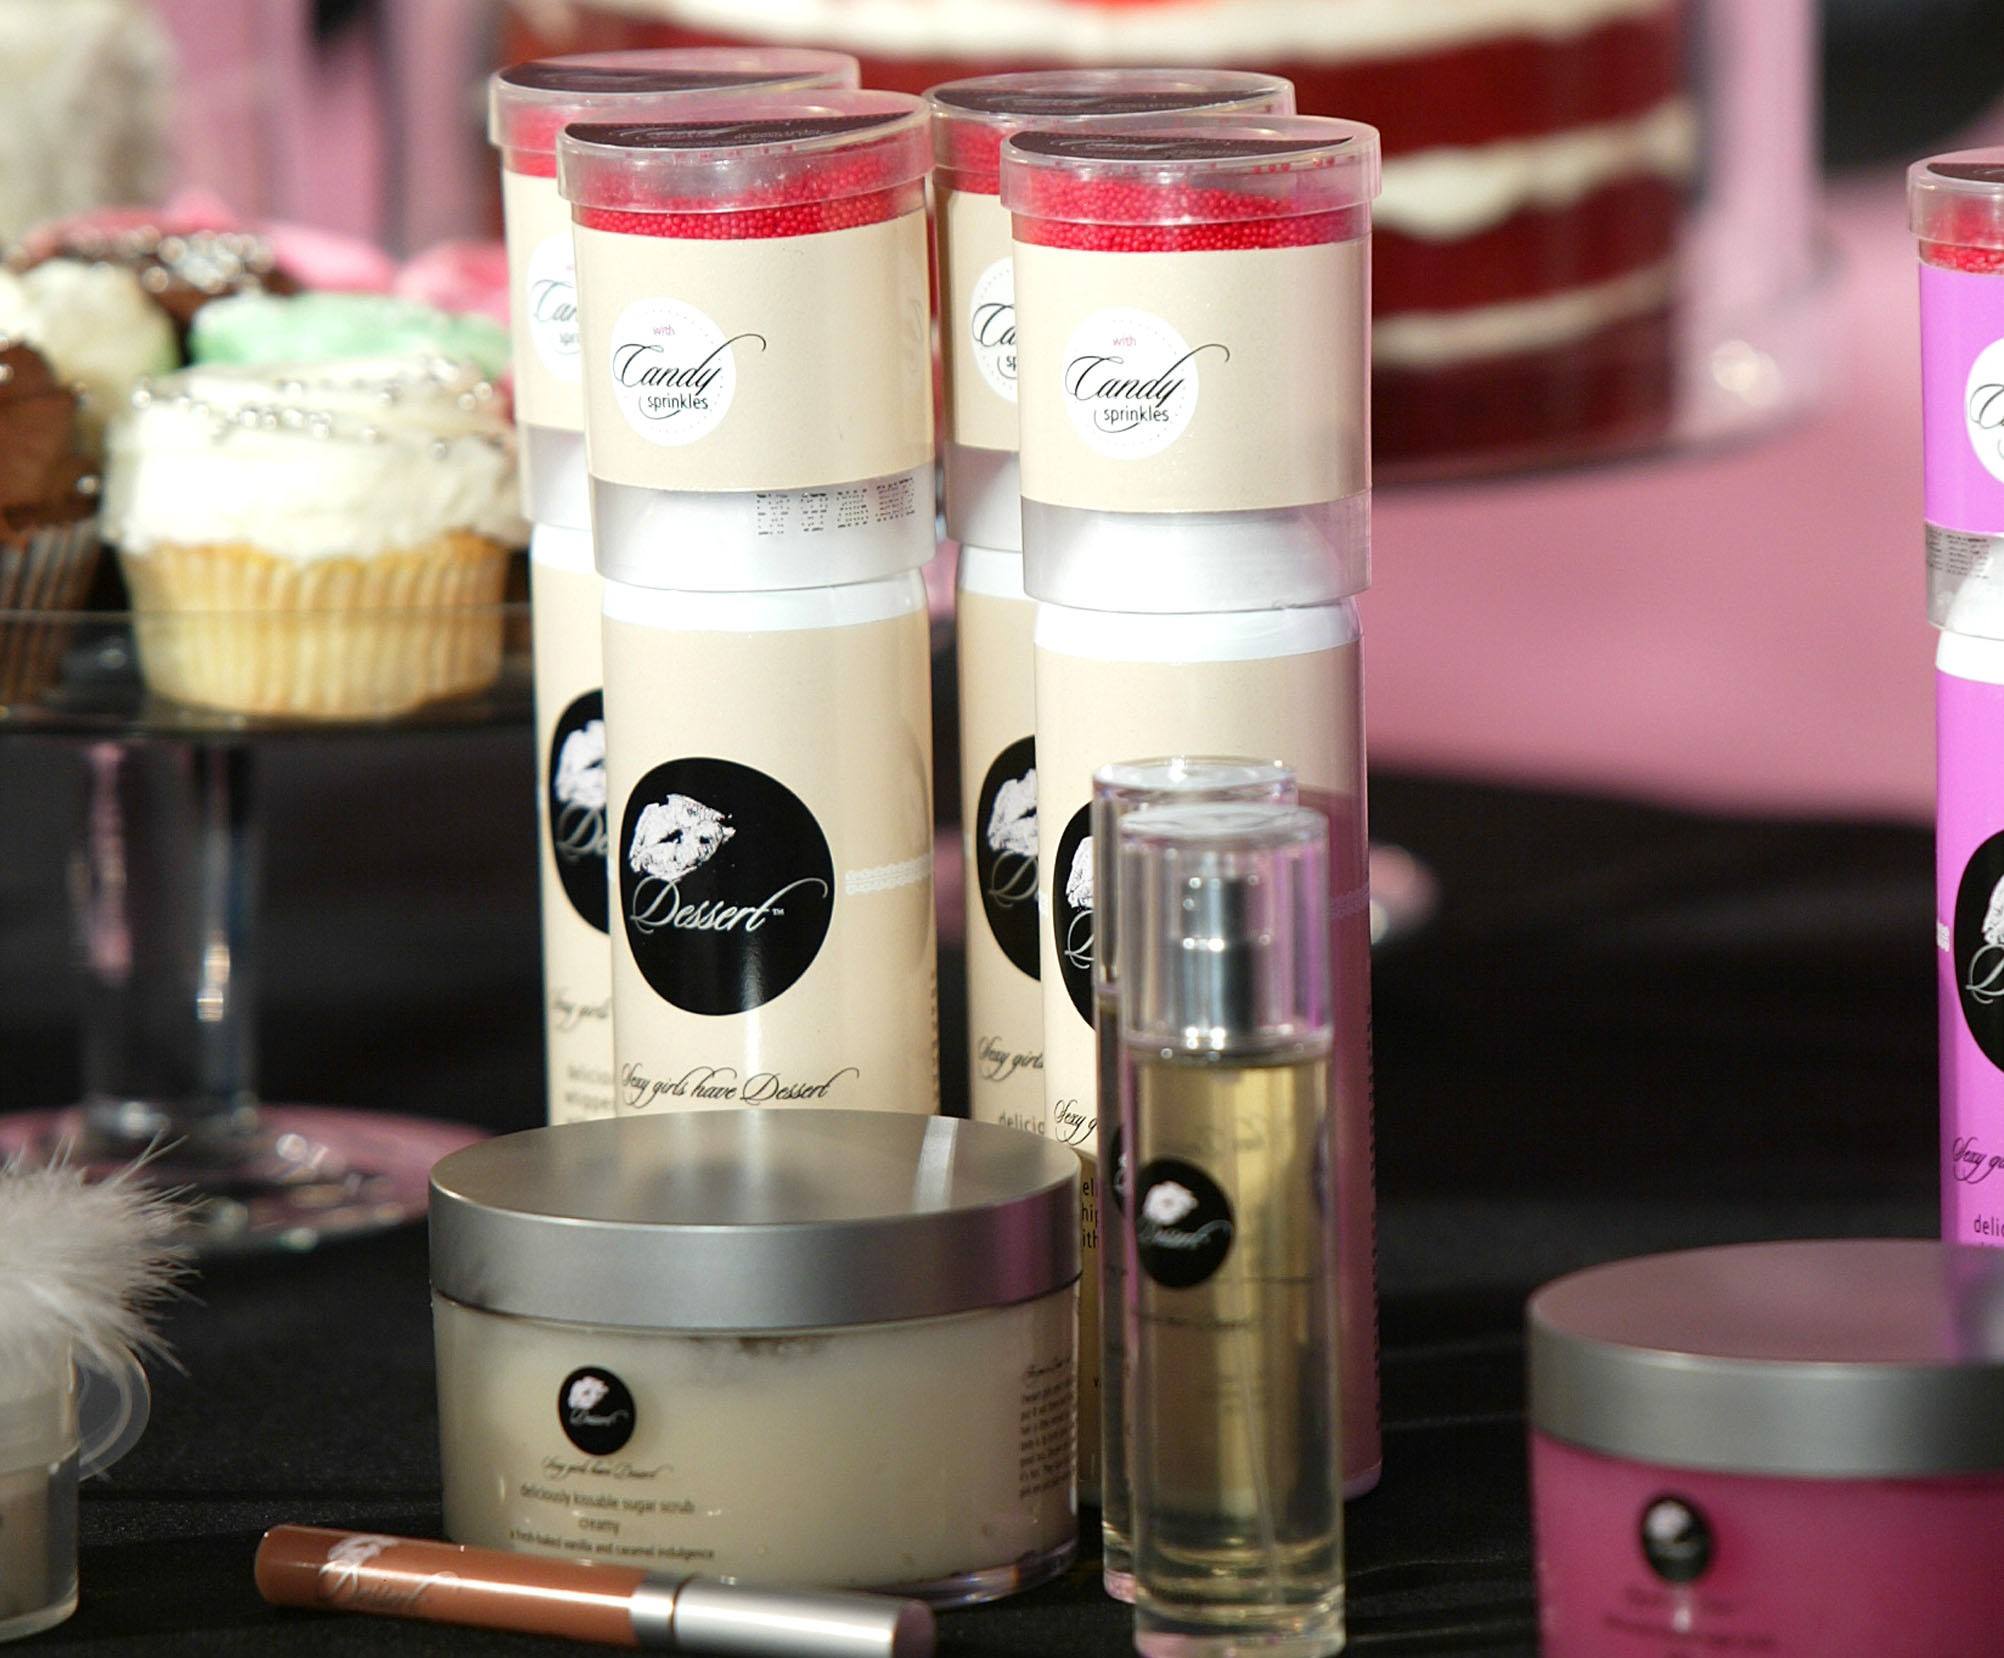 Jessica Simpson Launches New Fragrance & Body Care Line Dessert